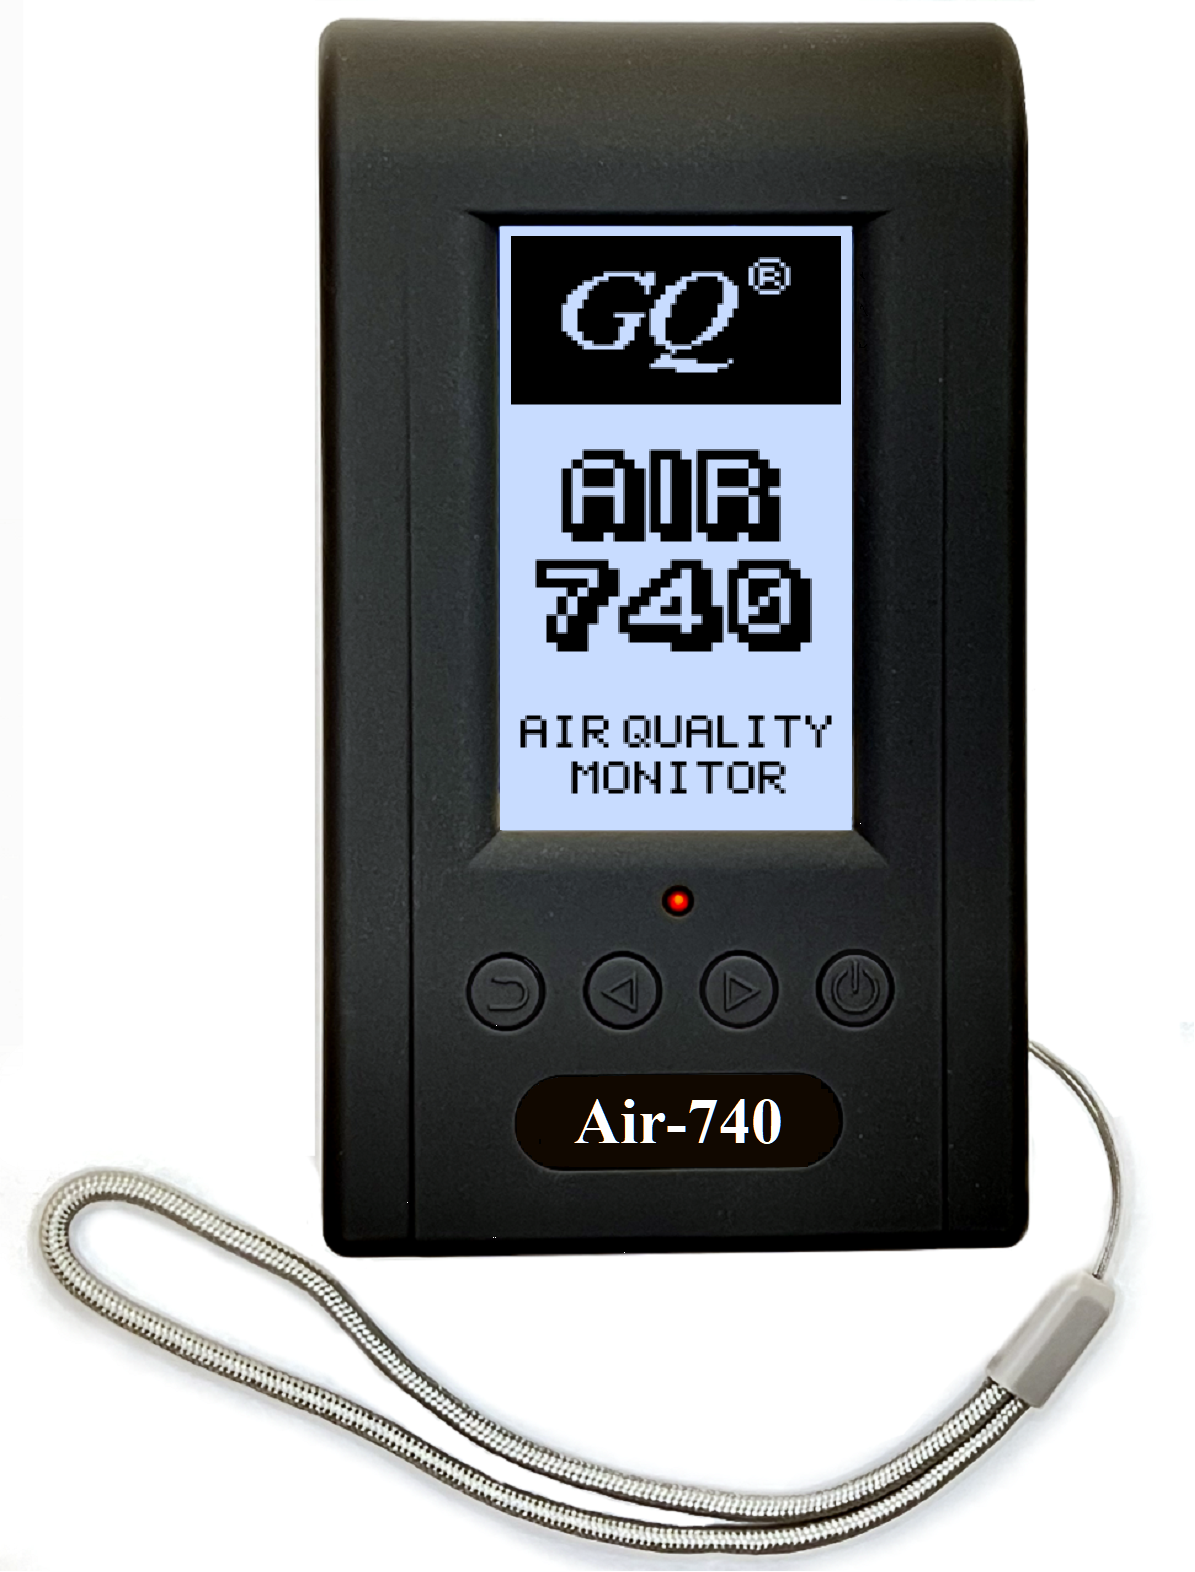 Air-740 CO2 HCHO Temperature Pressure